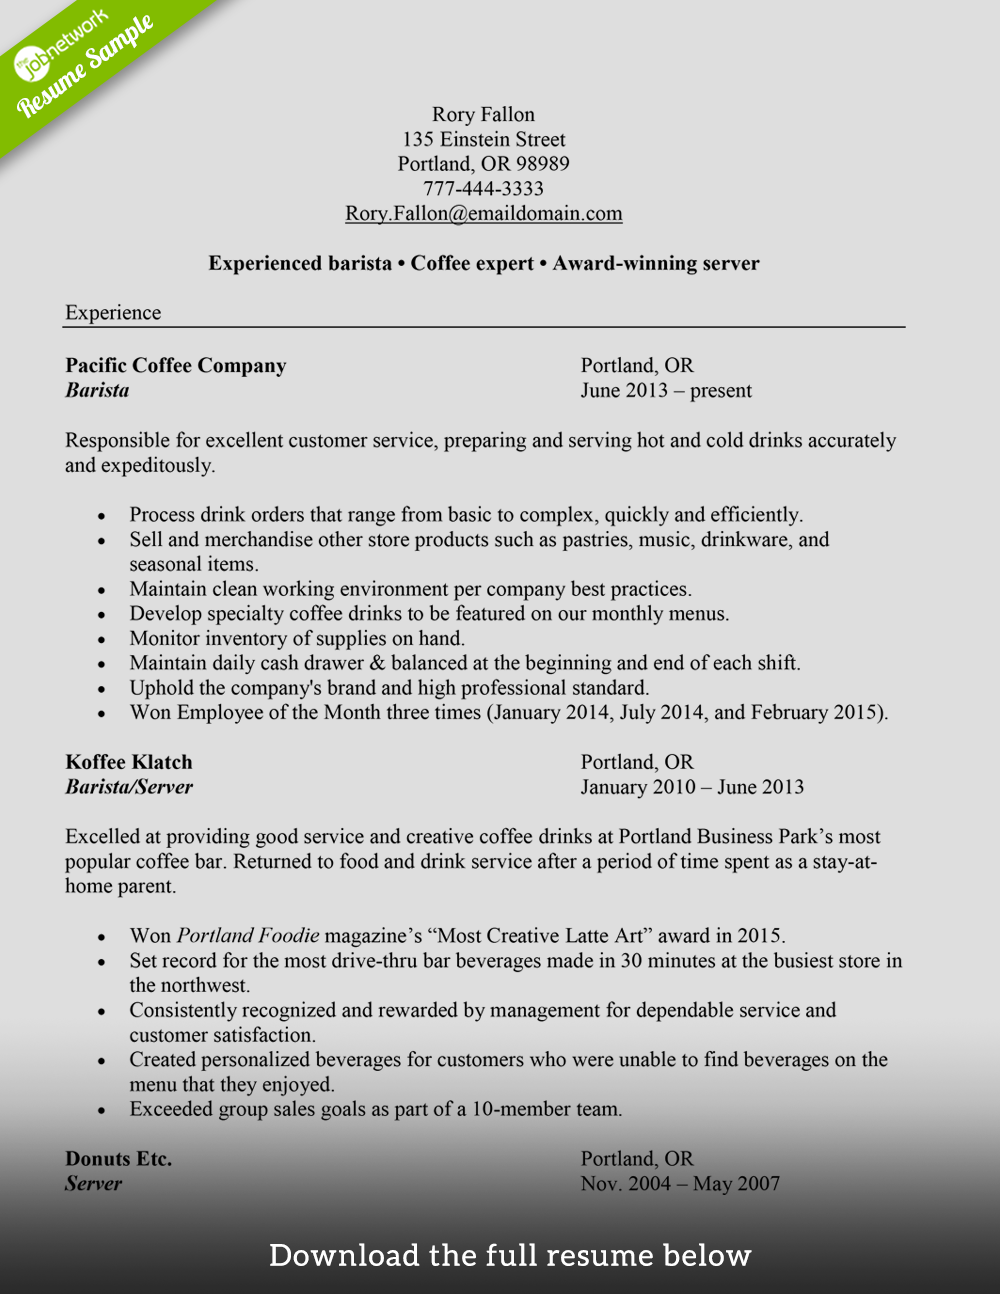 How To Write A Good Resume Barista Resume Experienced how to write a good resume|wikiresume.com